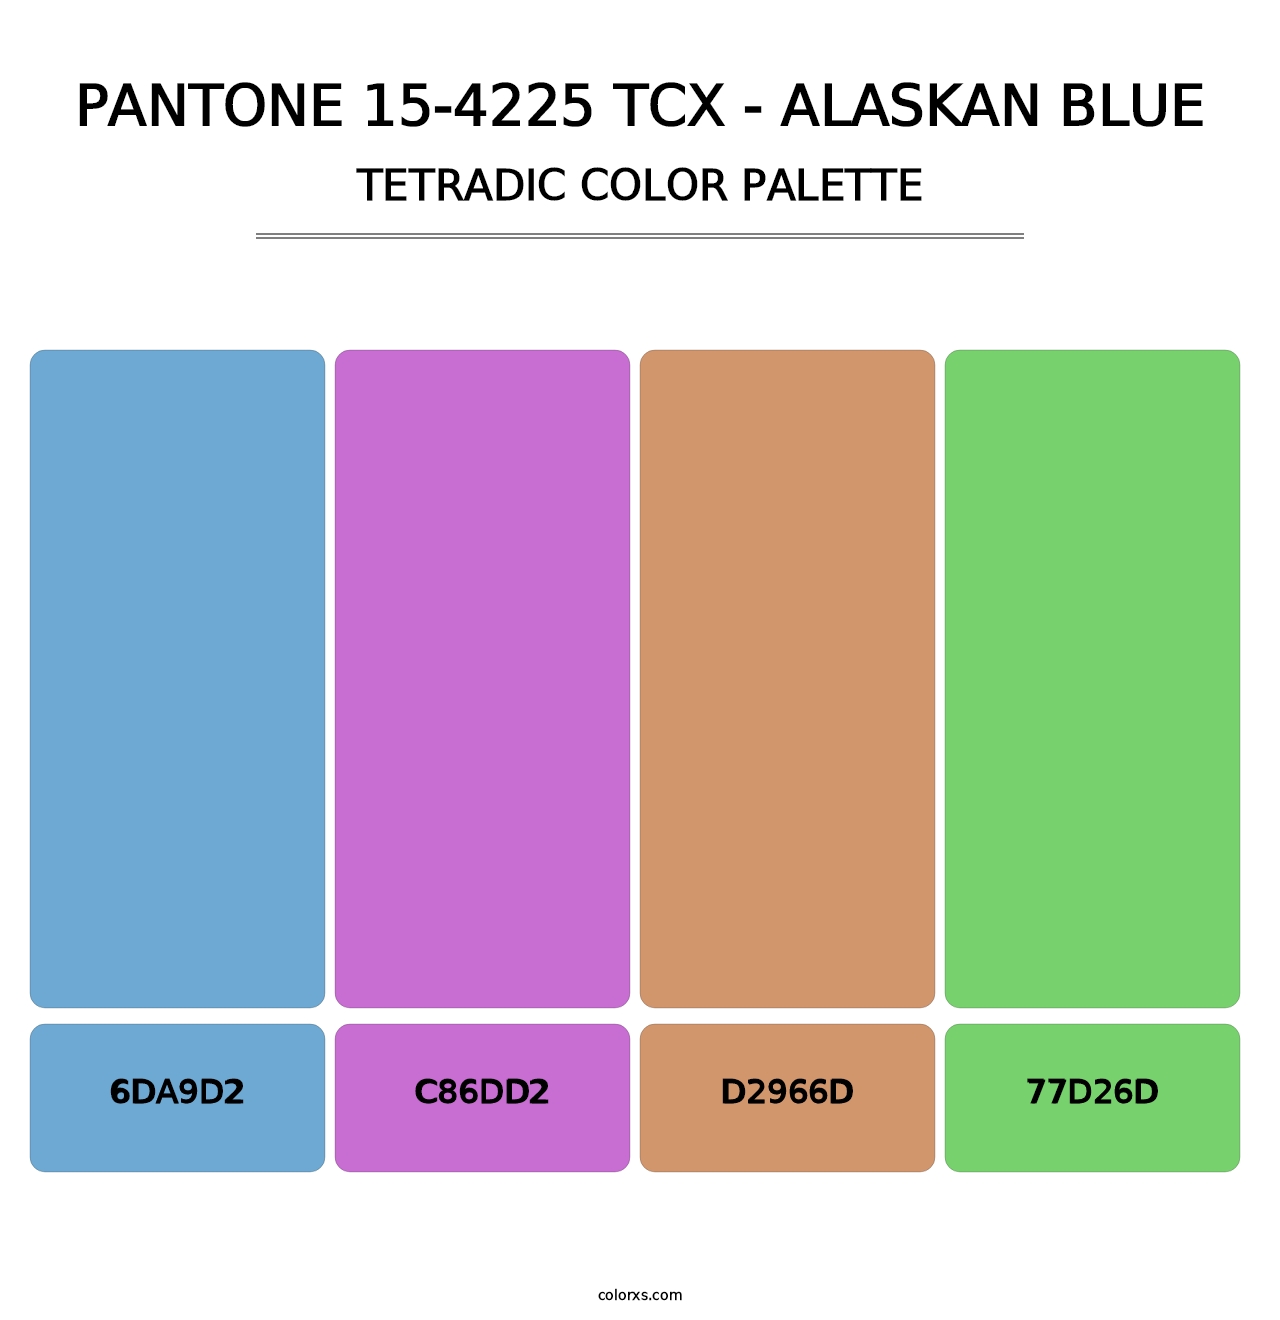 PANTONE 15-4225 TCX - Alaskan Blue - Tetradic Color Palette